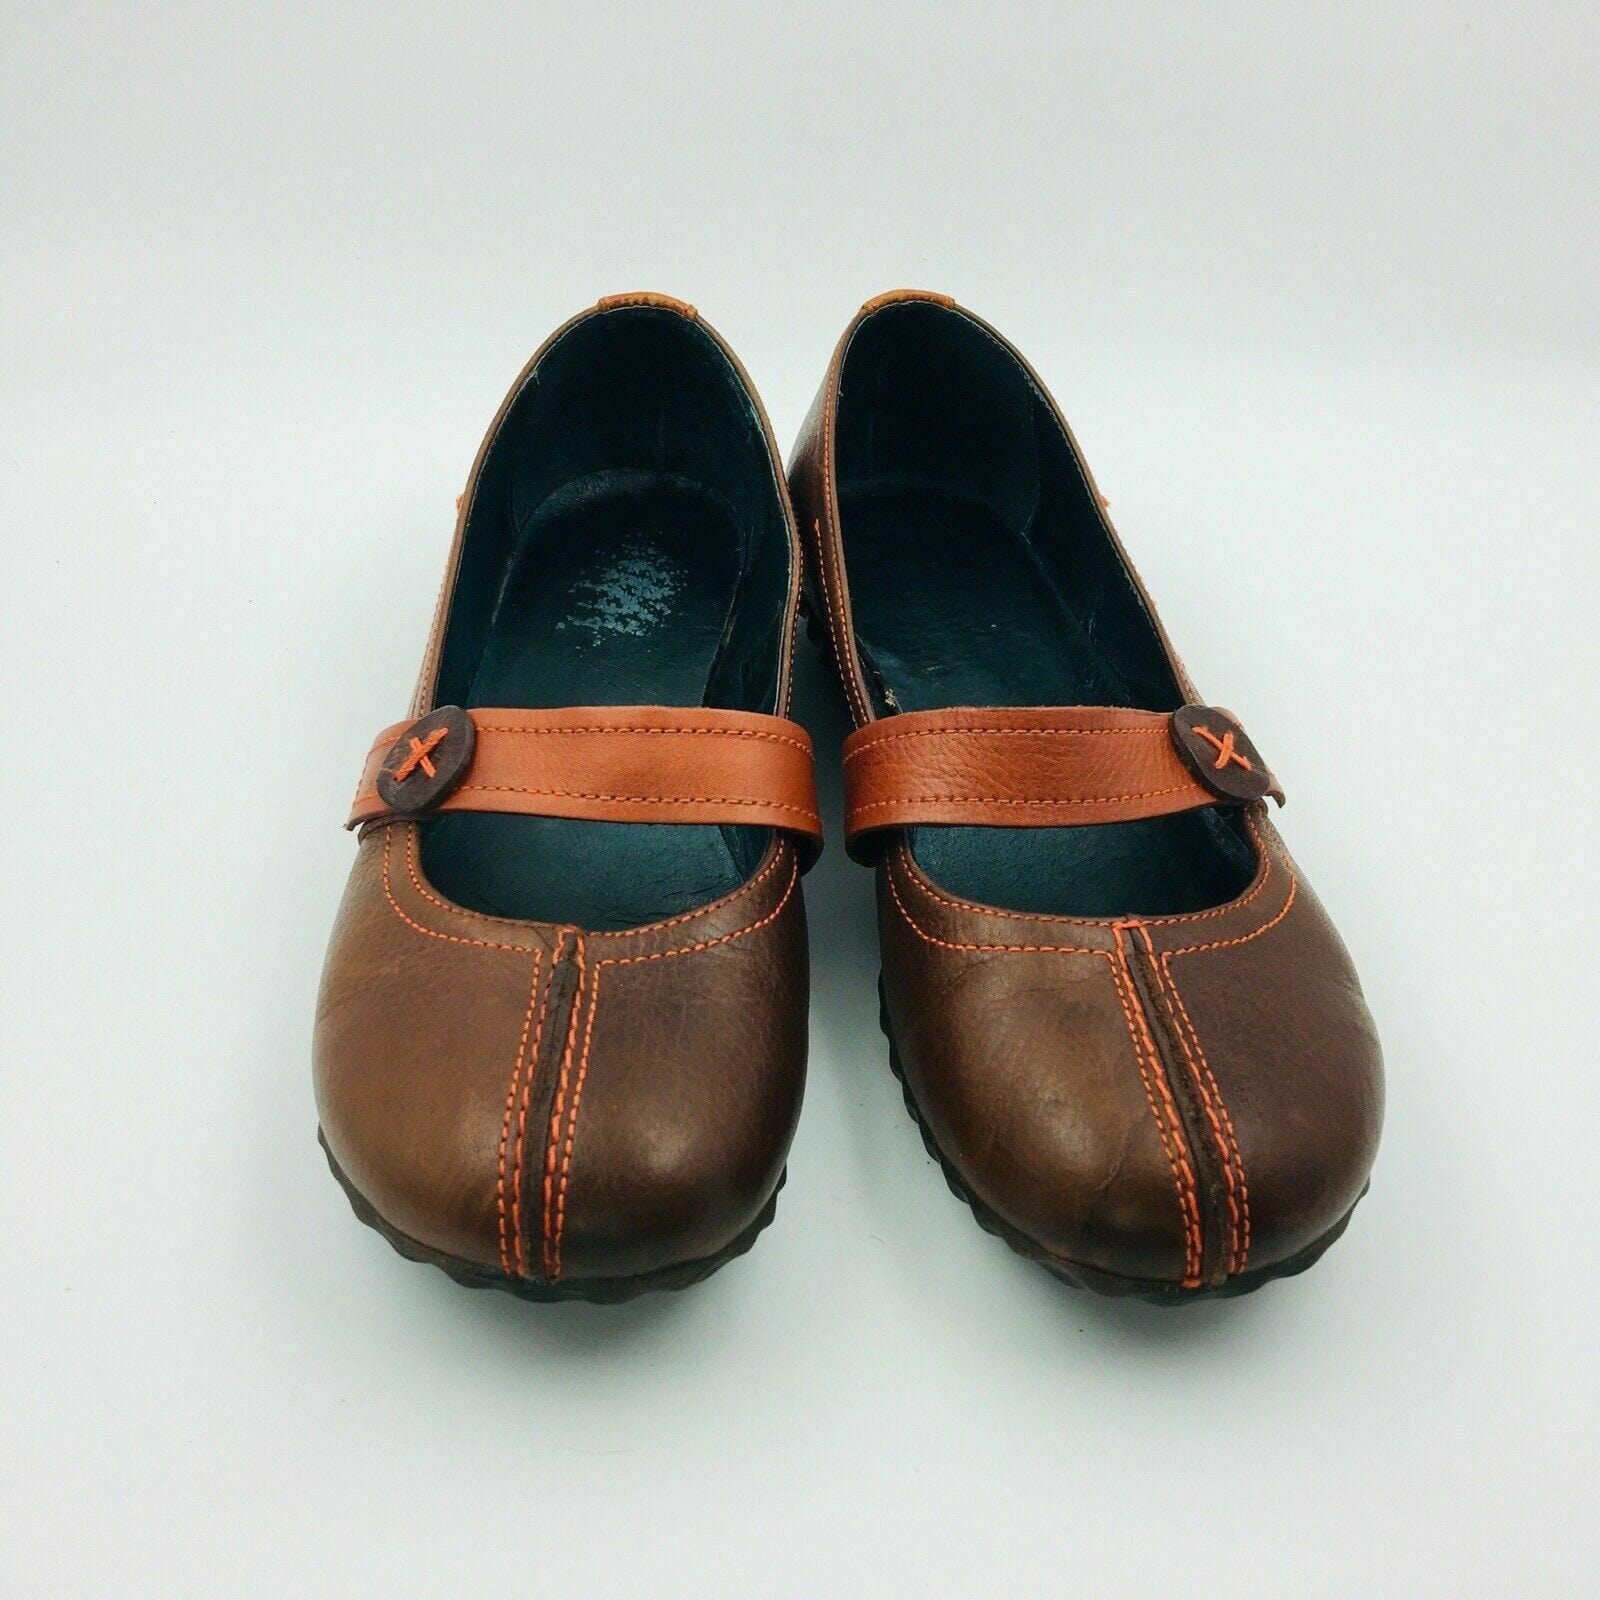 Heyraud Womens Maryjane Shoes Size 7.5 Brown Leather Slip On Comfort 6111 - parsimonyshoppes